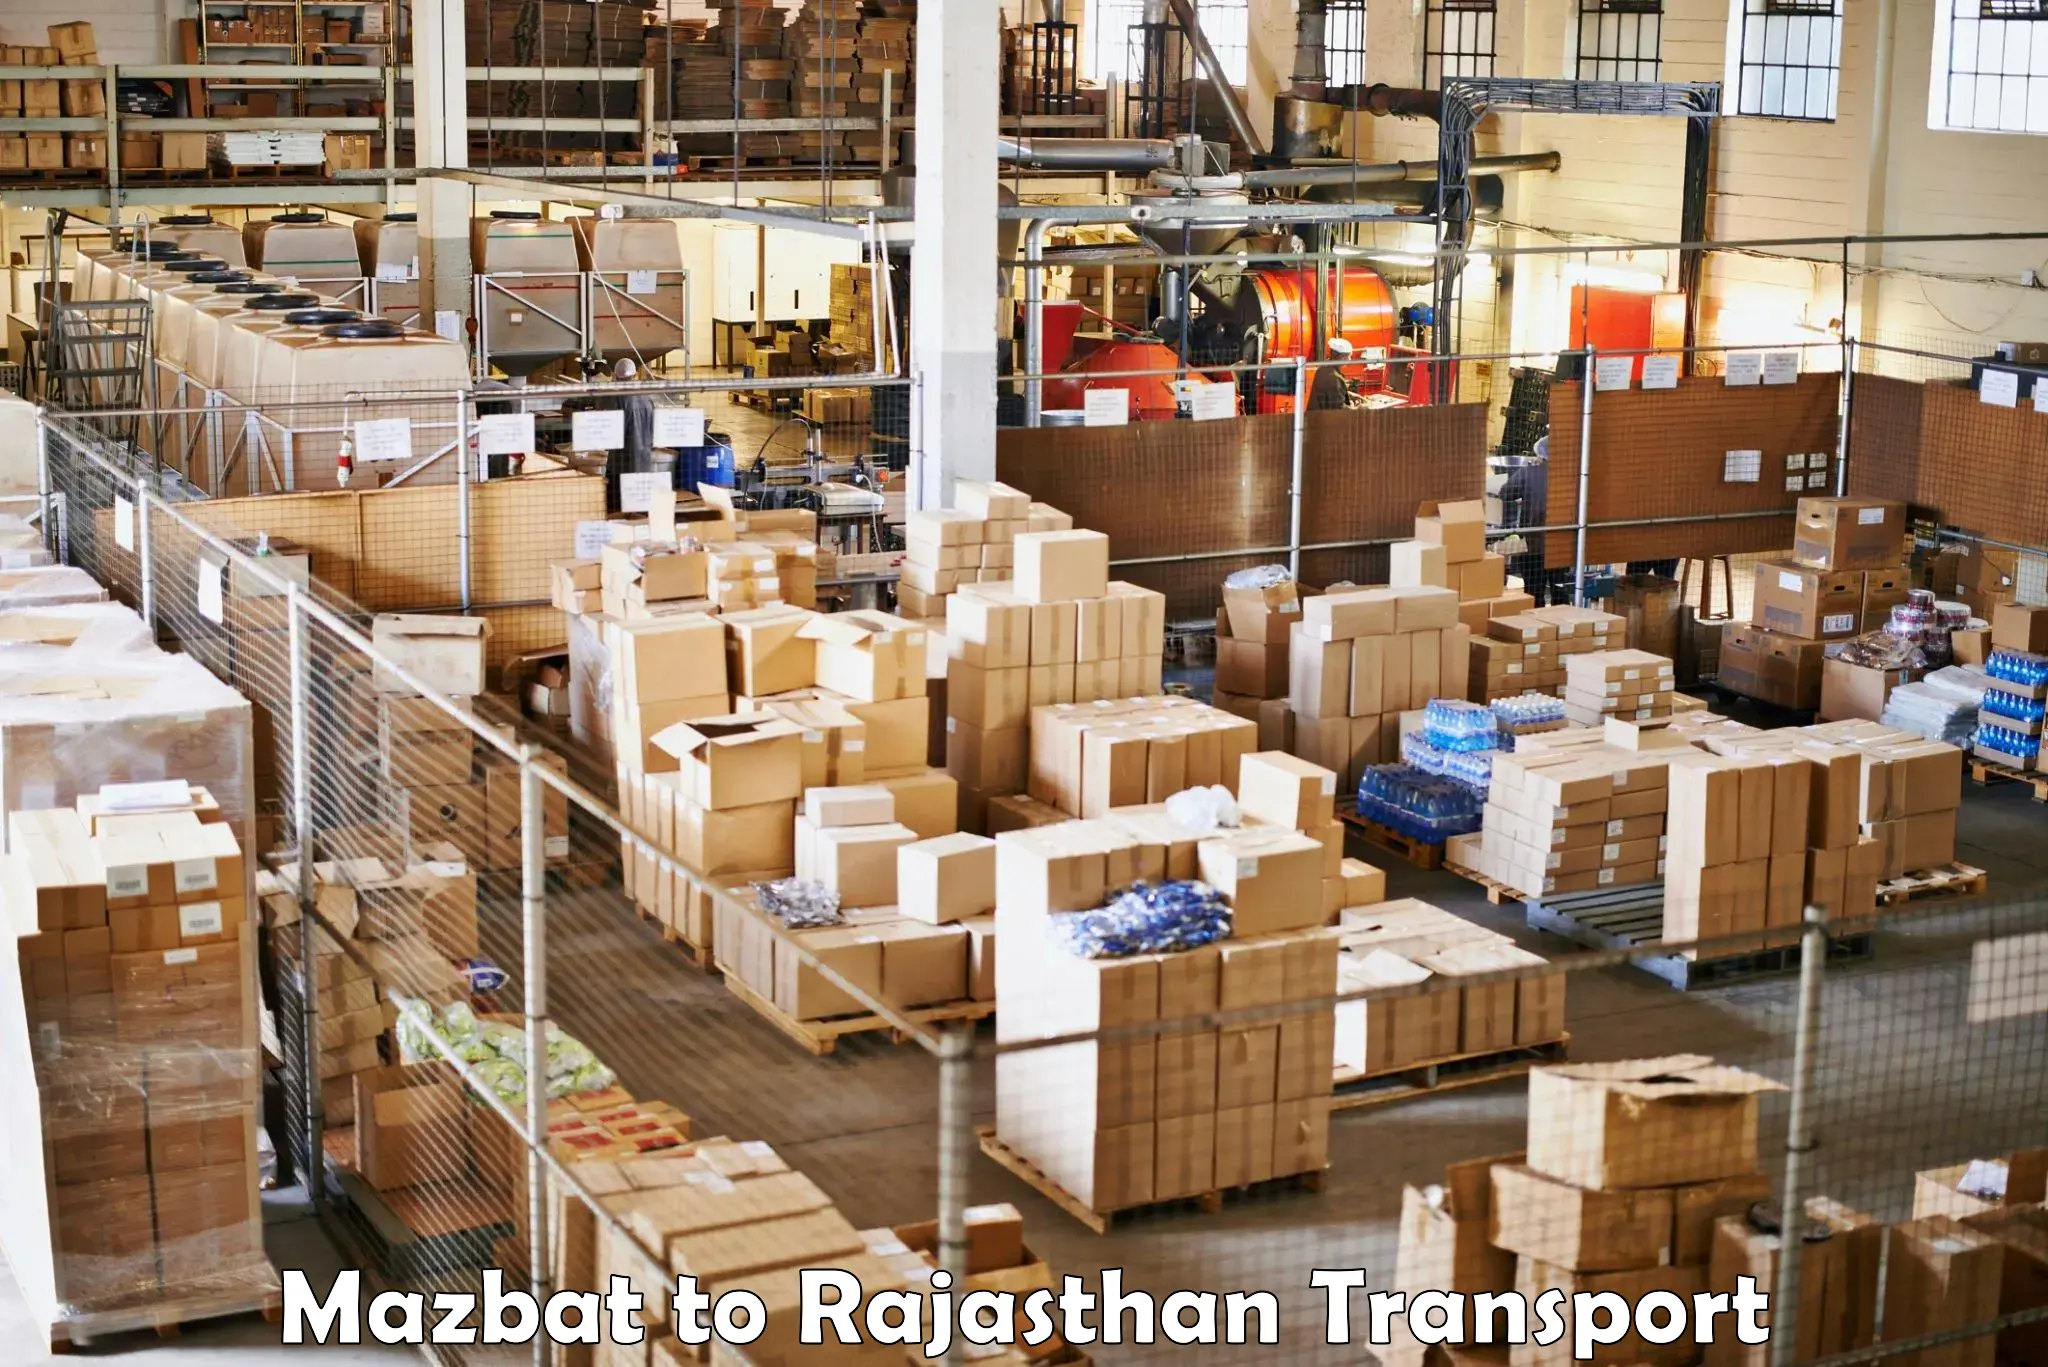 Delivery service Mazbat to Jaipur